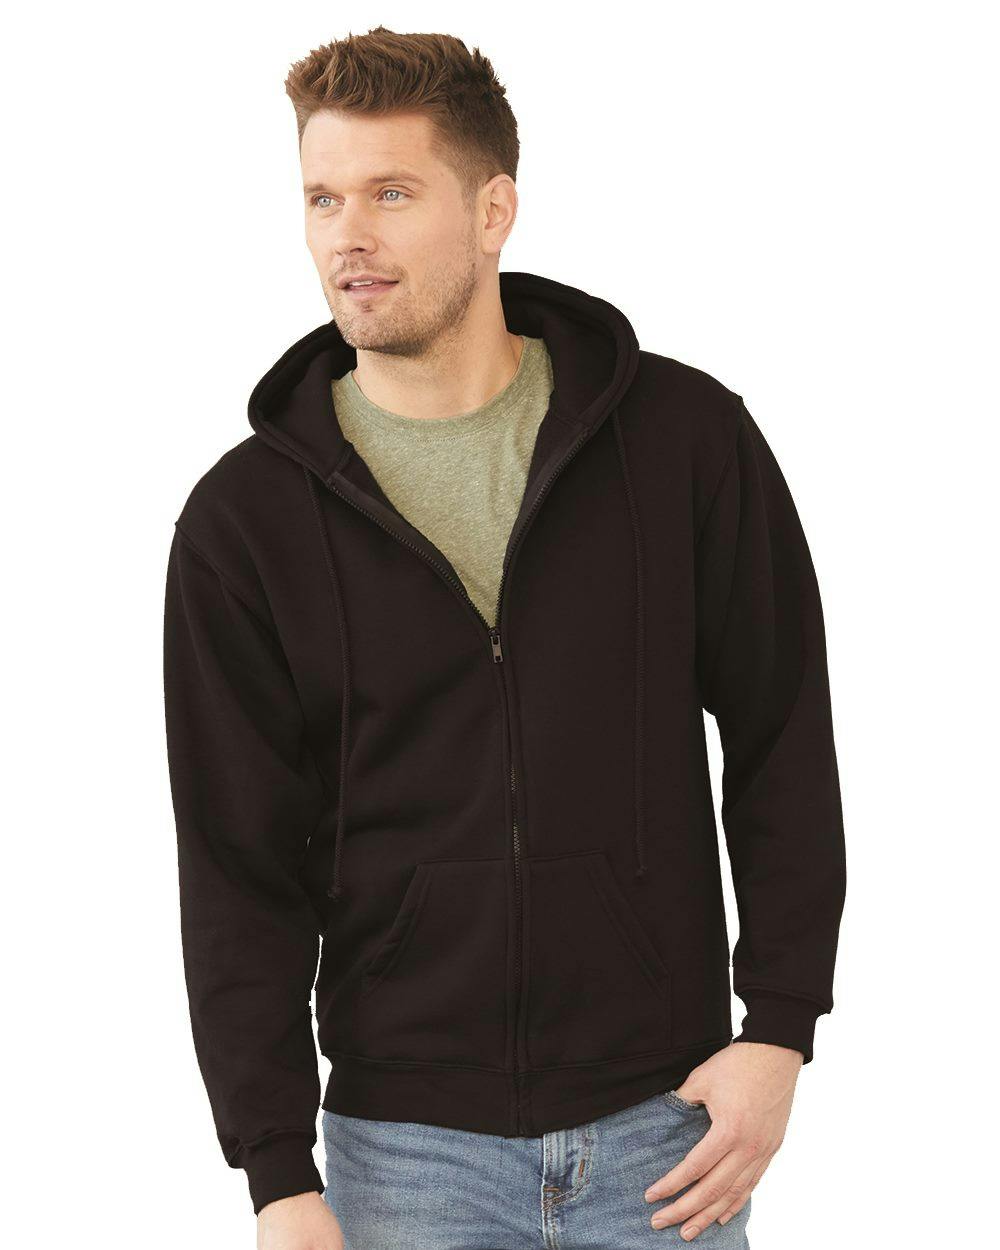 Image for USA-Made Full-Zip Hooded Sweatshirt - 900